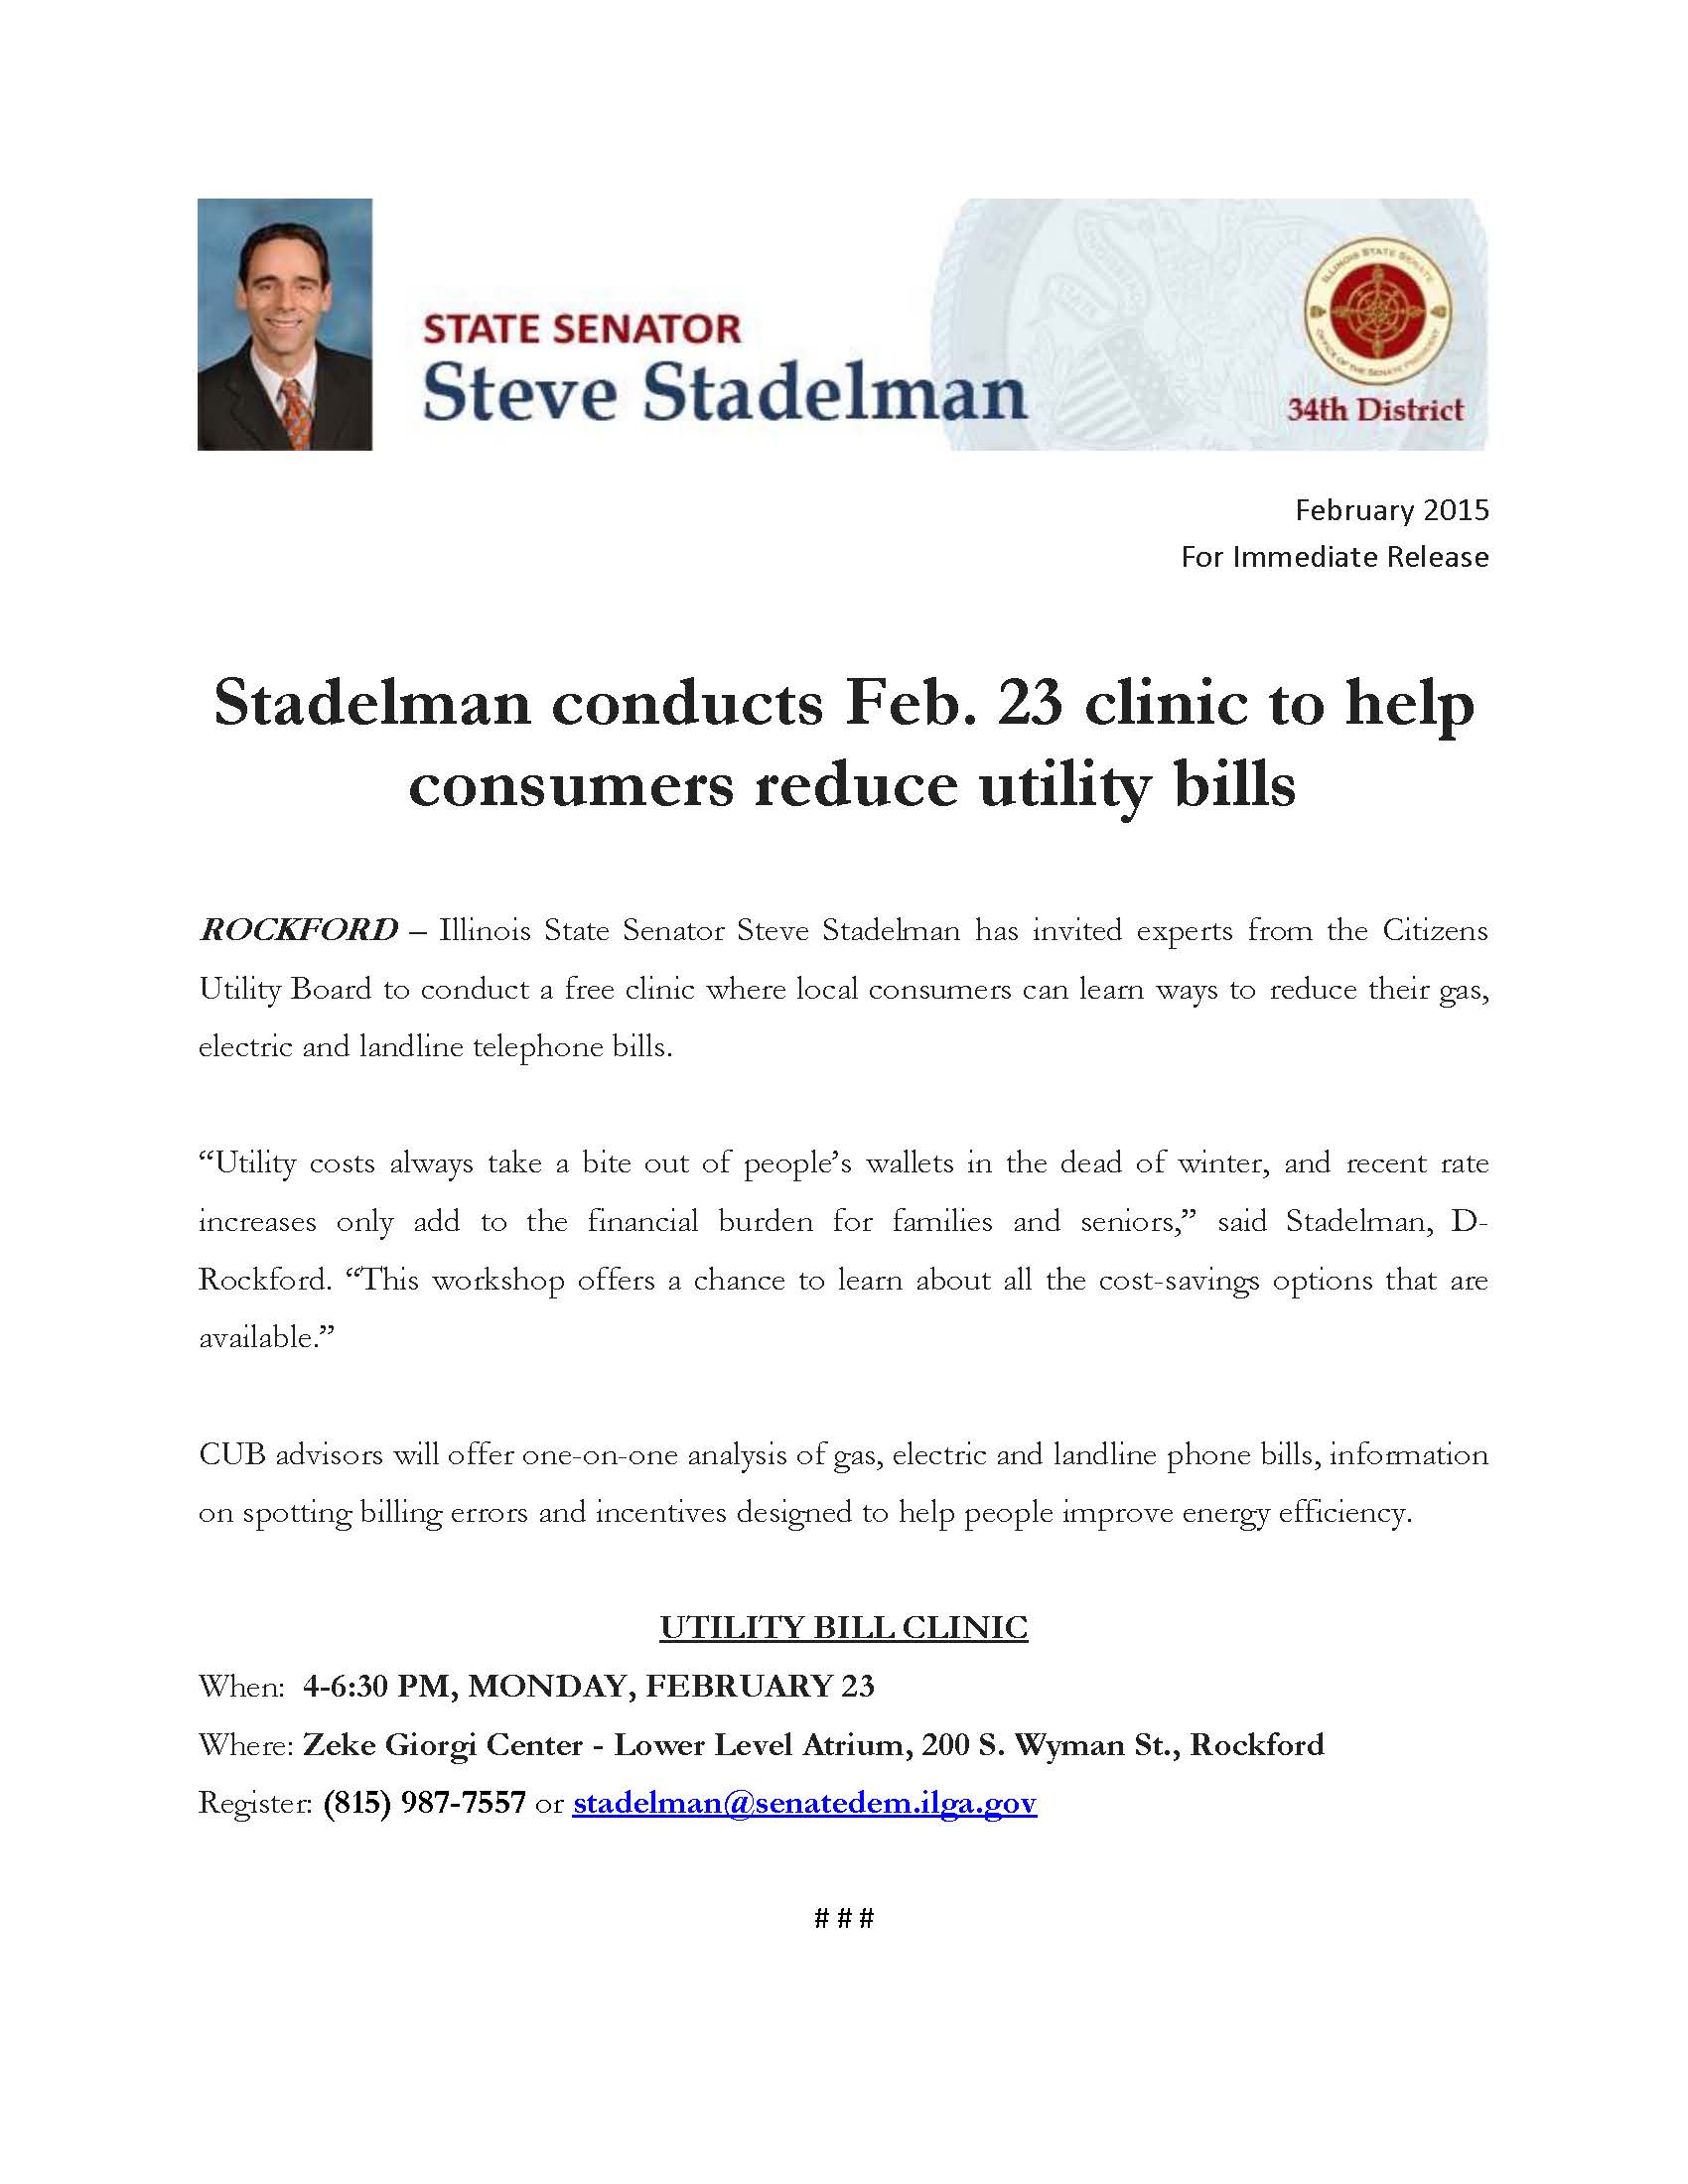 sen. stadelman hosting cub clinic to help consumers reduce utility bills